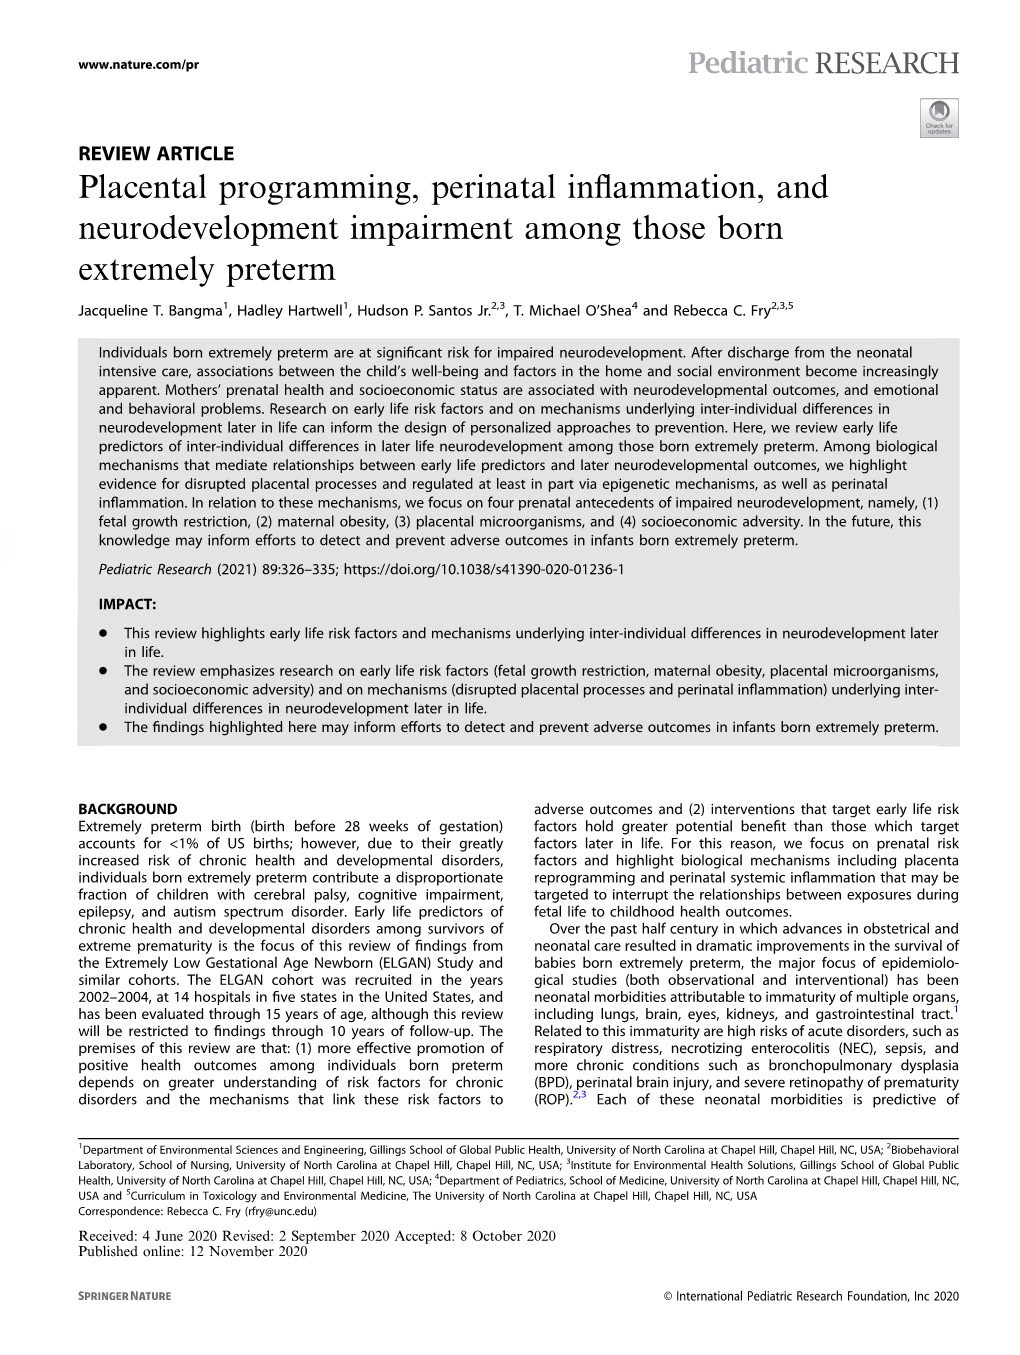 Placental Programming, Perinatal Inflammation, And